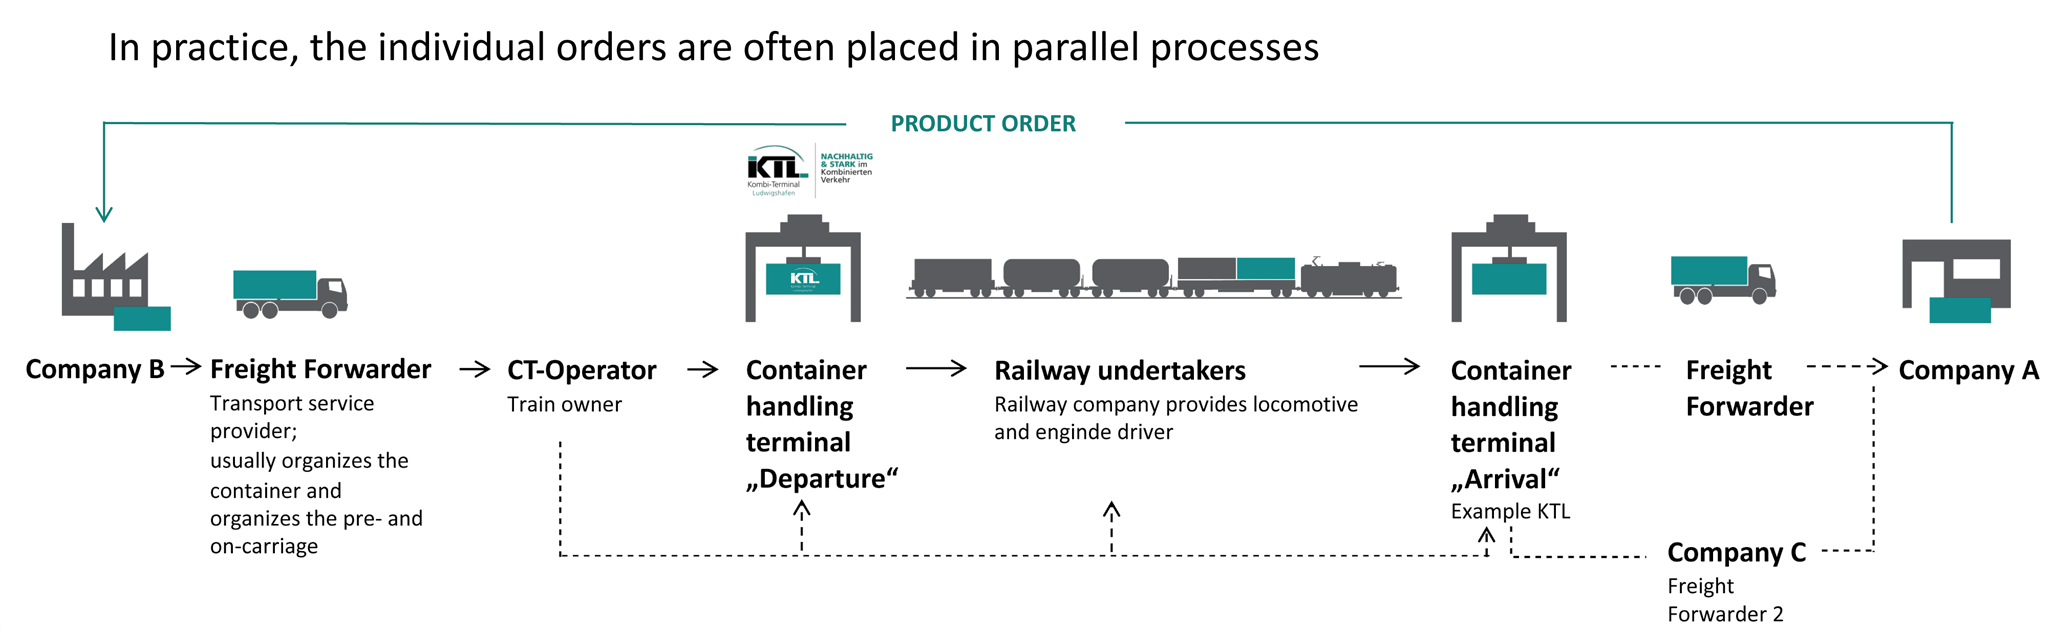 KTL individual orders in parallel processes